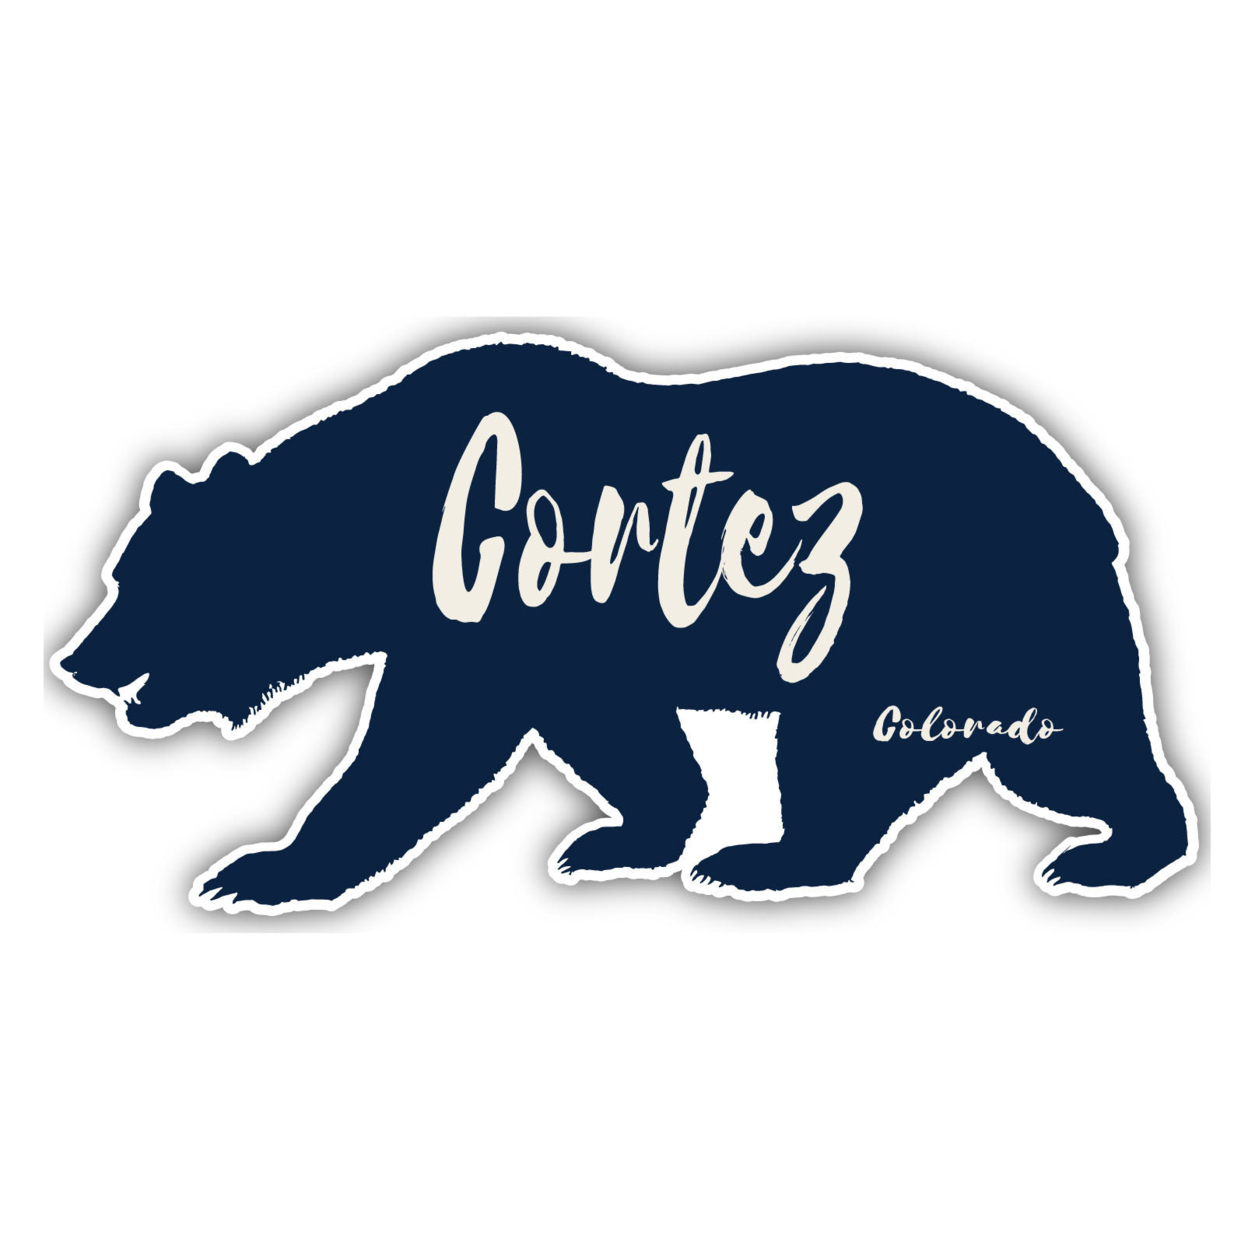 Cortez Colorado Souvenir Decorative Stickers (Choose Theme And Size) - Single Unit, 2-Inch, Bear